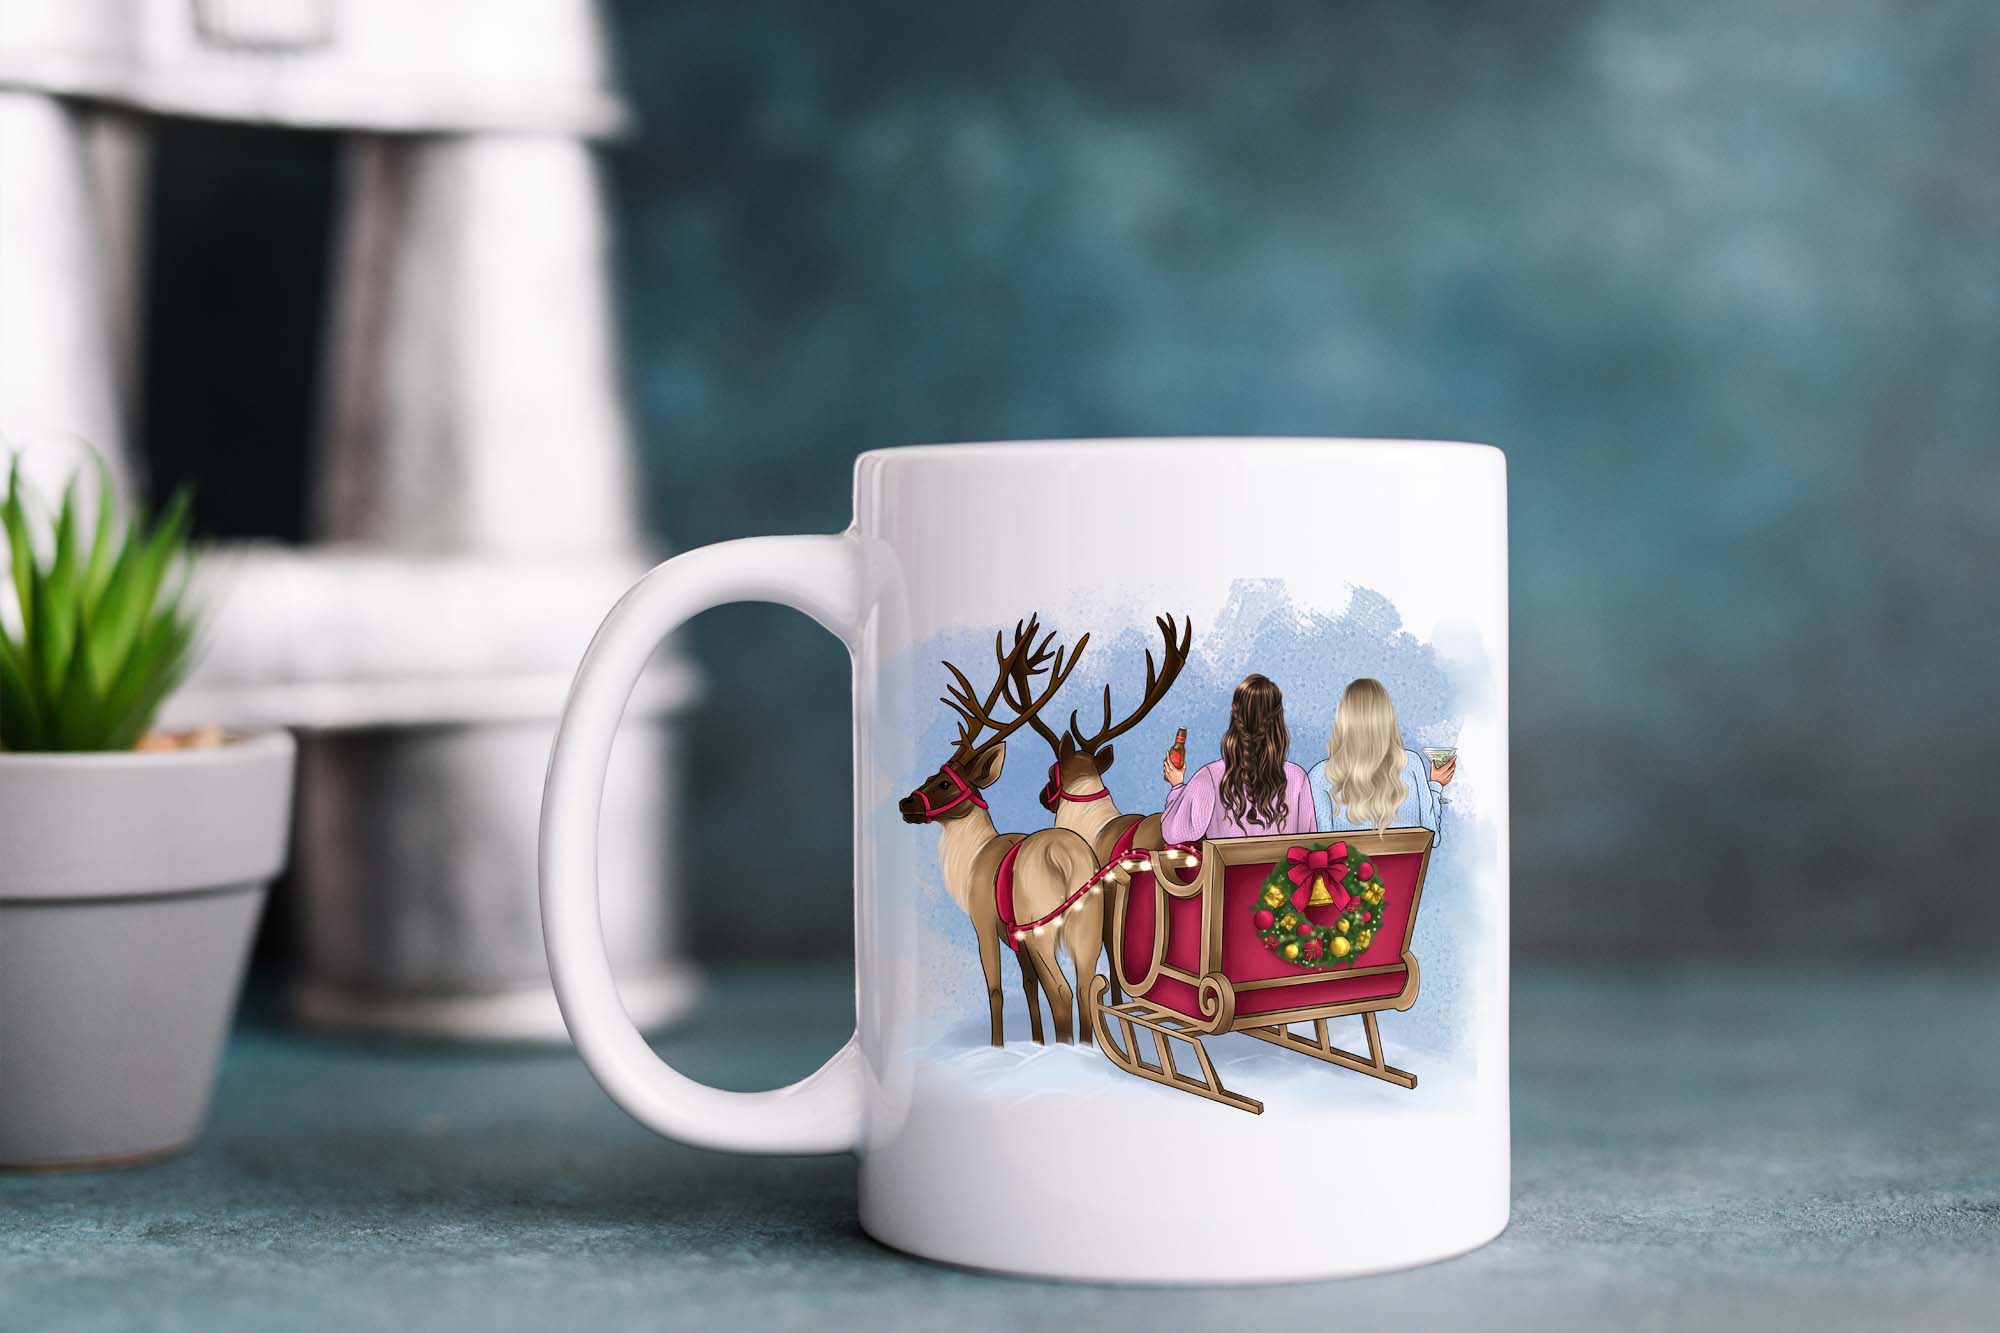 Friends in a Sleigh with Reindeer mug mockup.